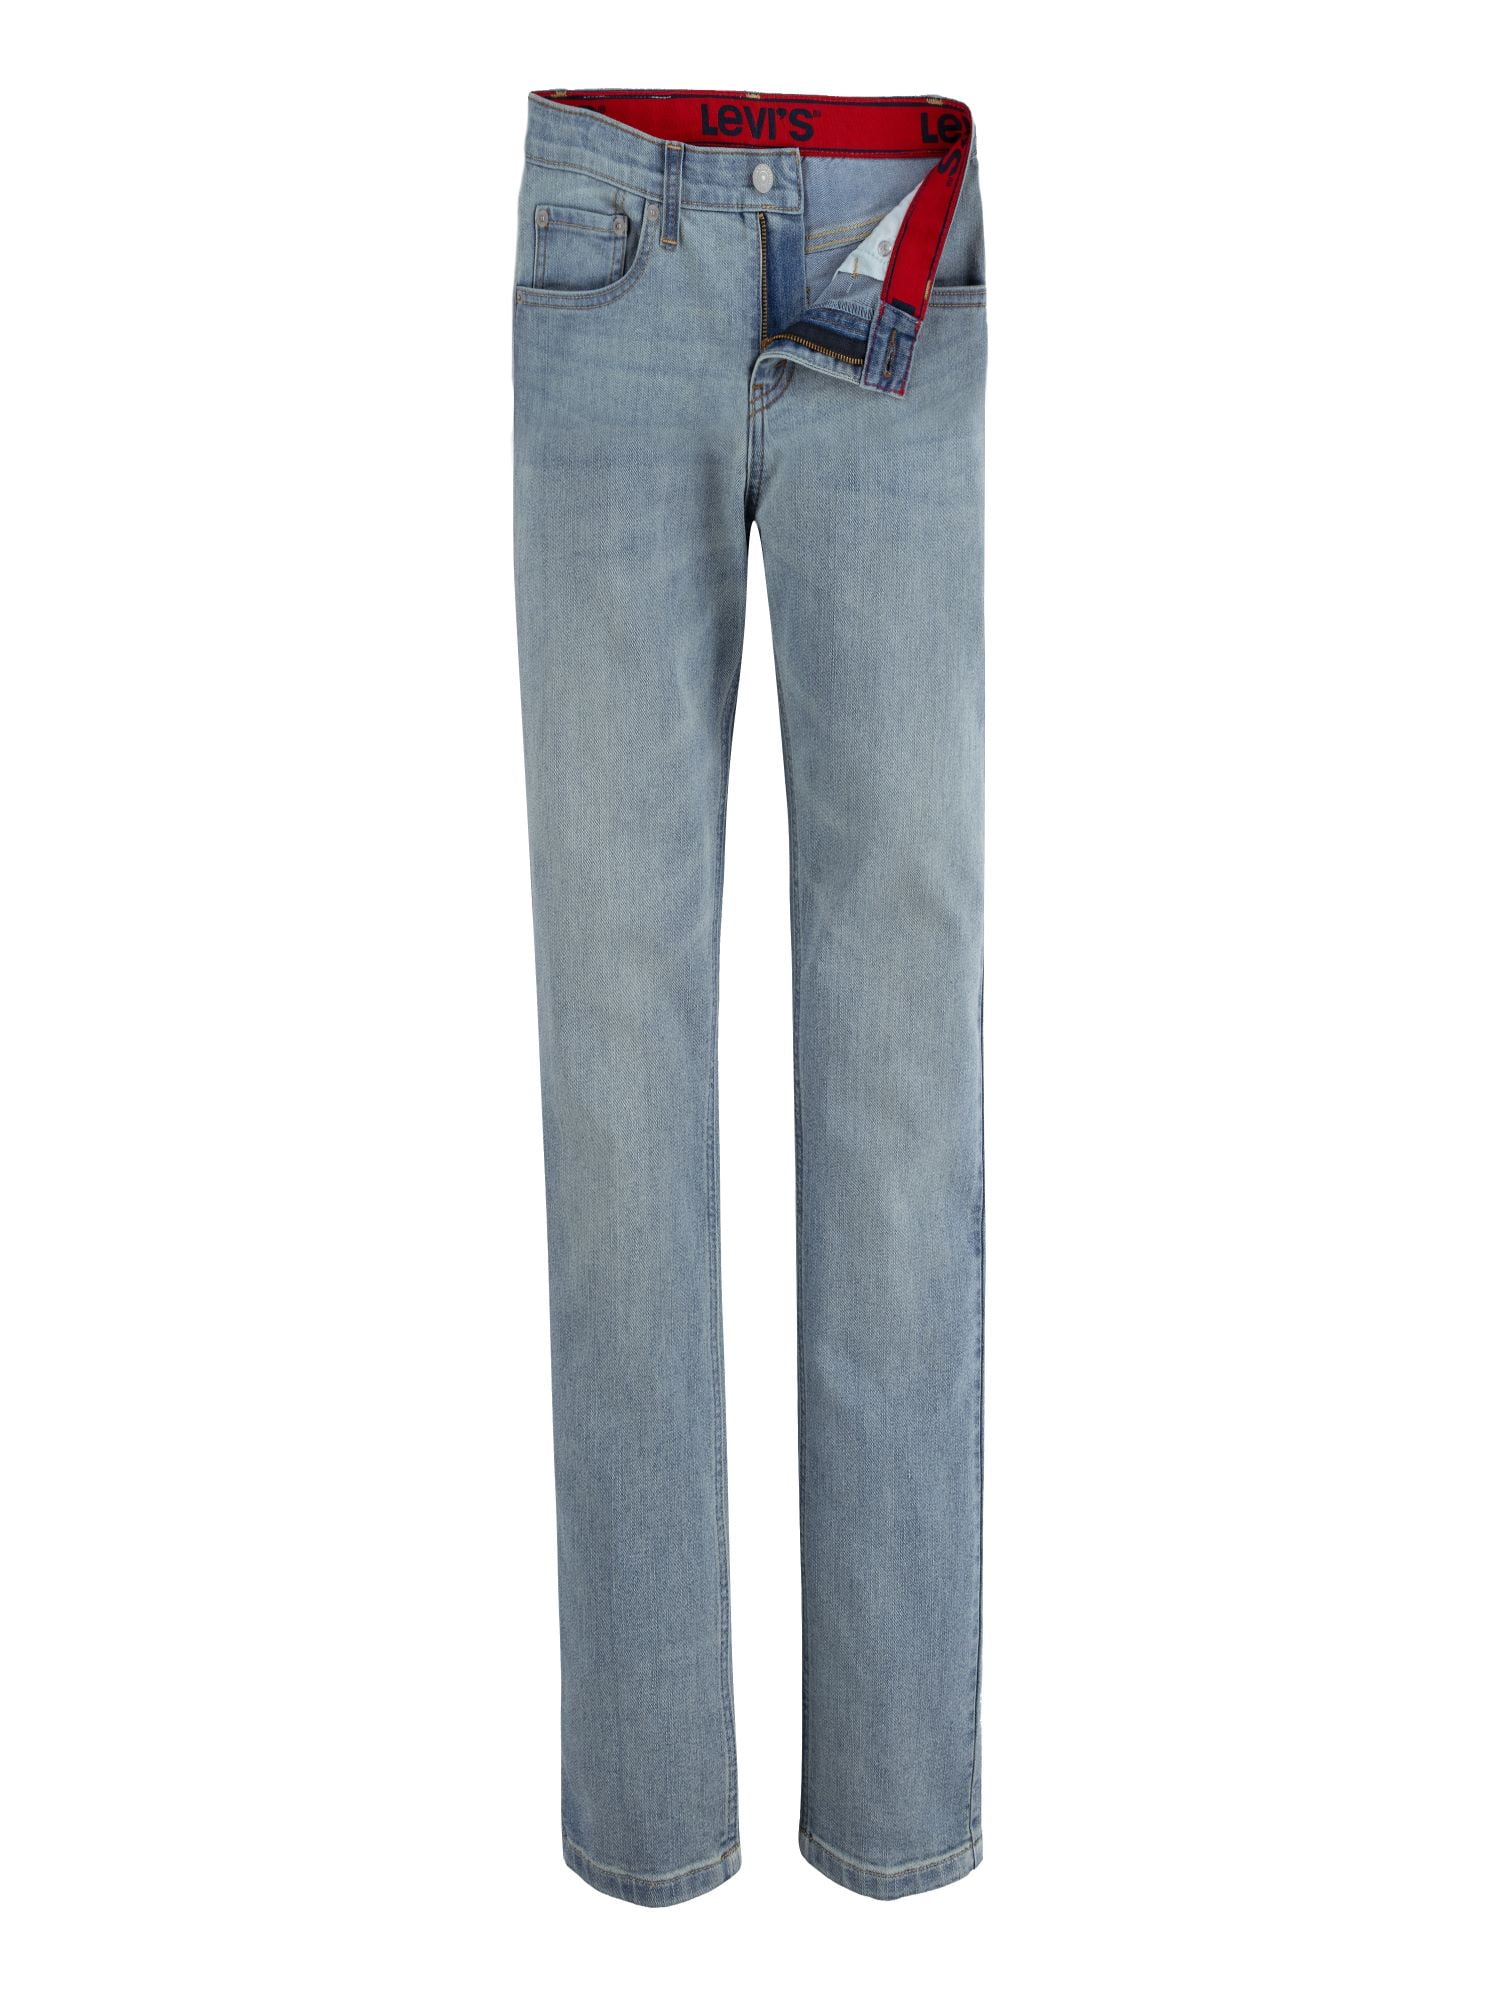 Boys 511 Slim Fit Jeans, Sizes 